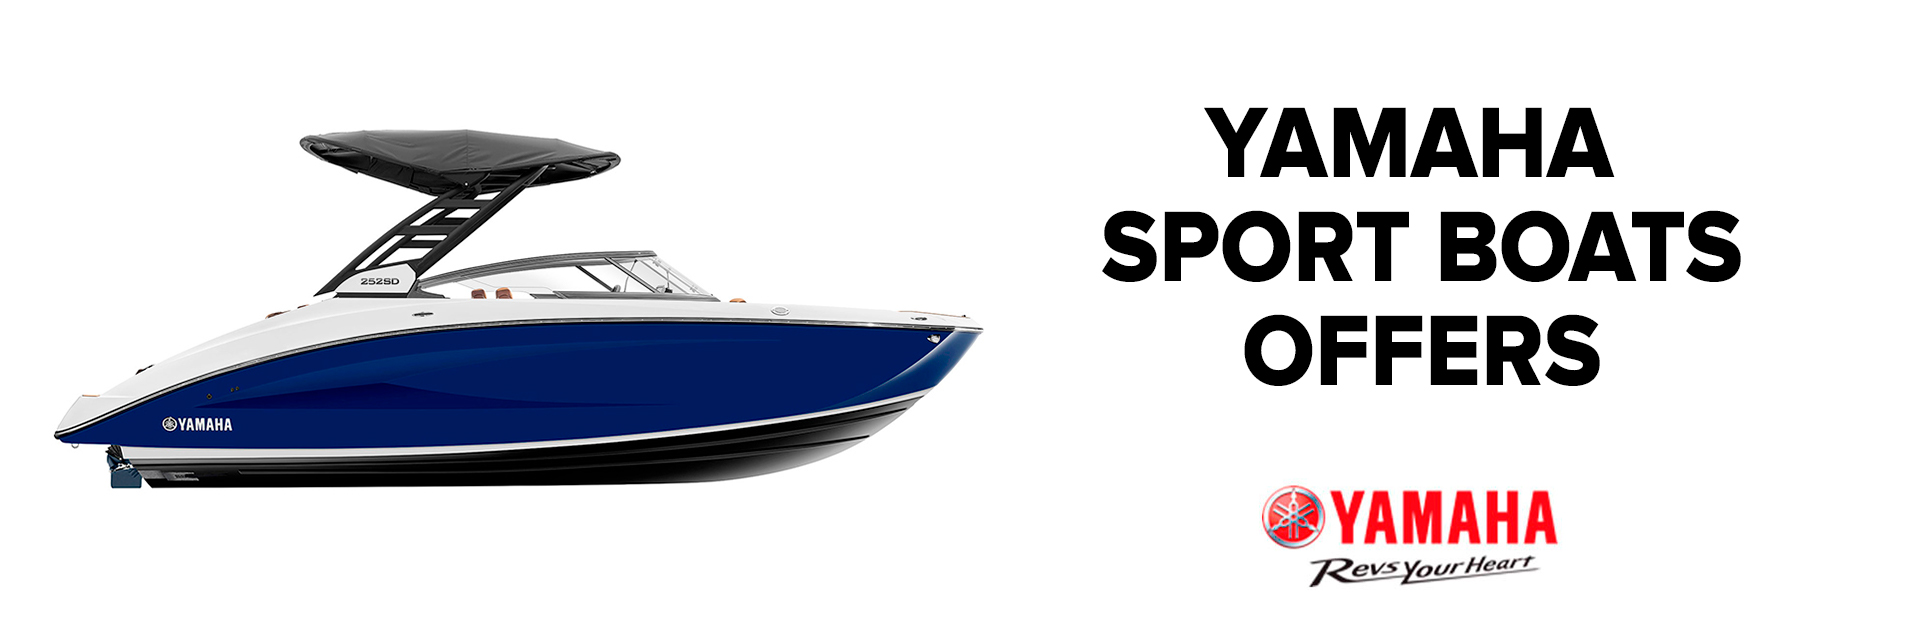 Yamaha Sport Boats Offers